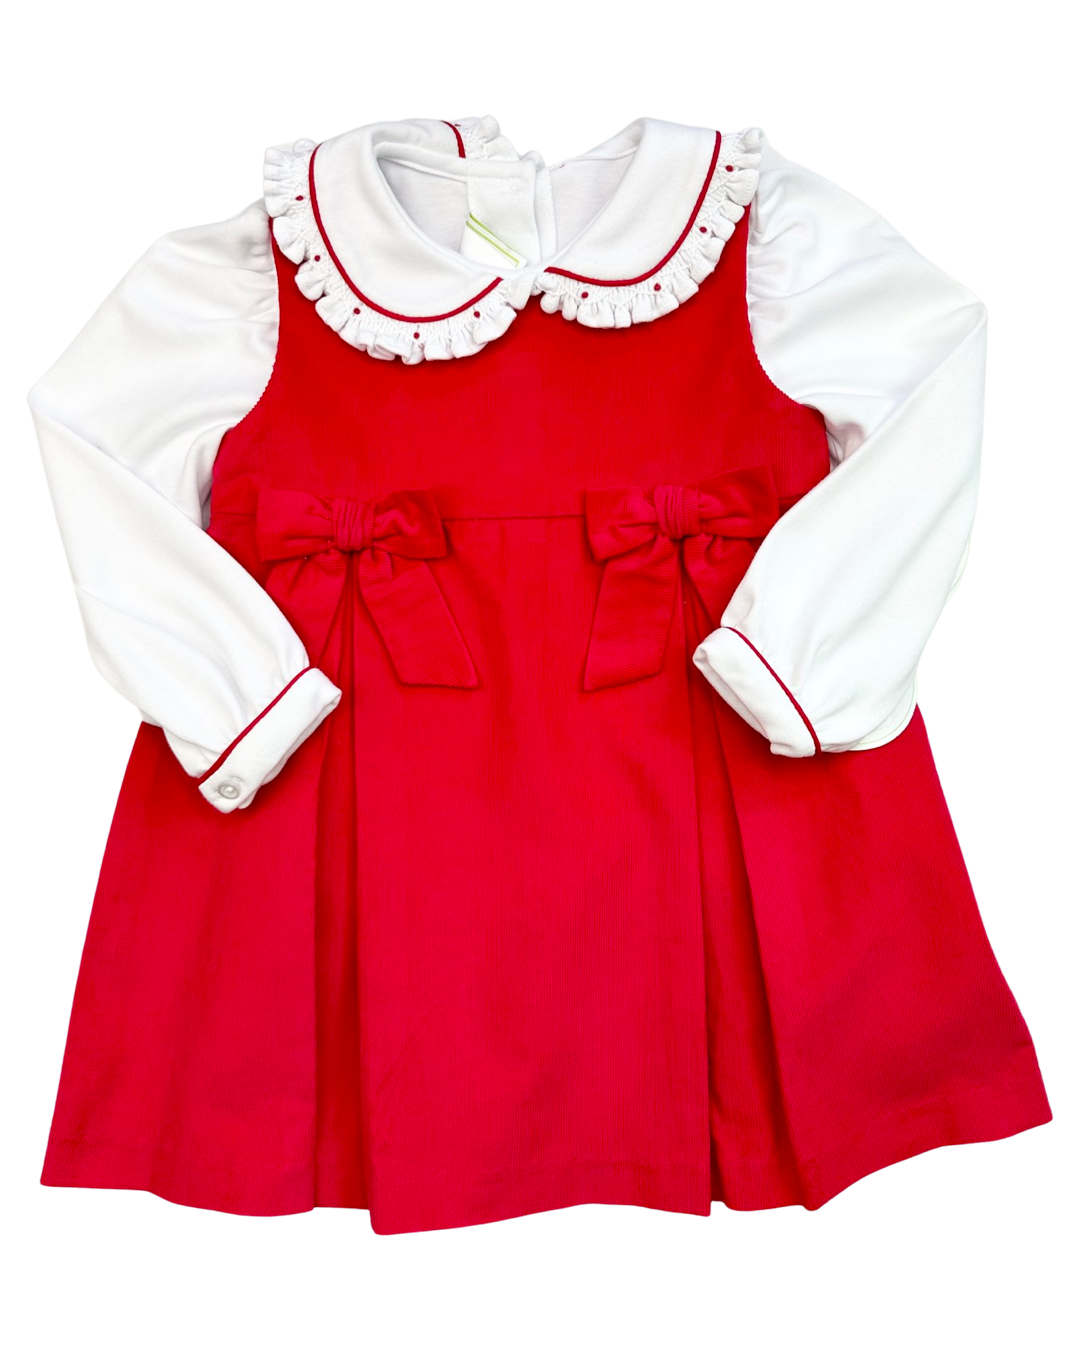 Windsor Jumper Dress - Red Cord (2T,3T)